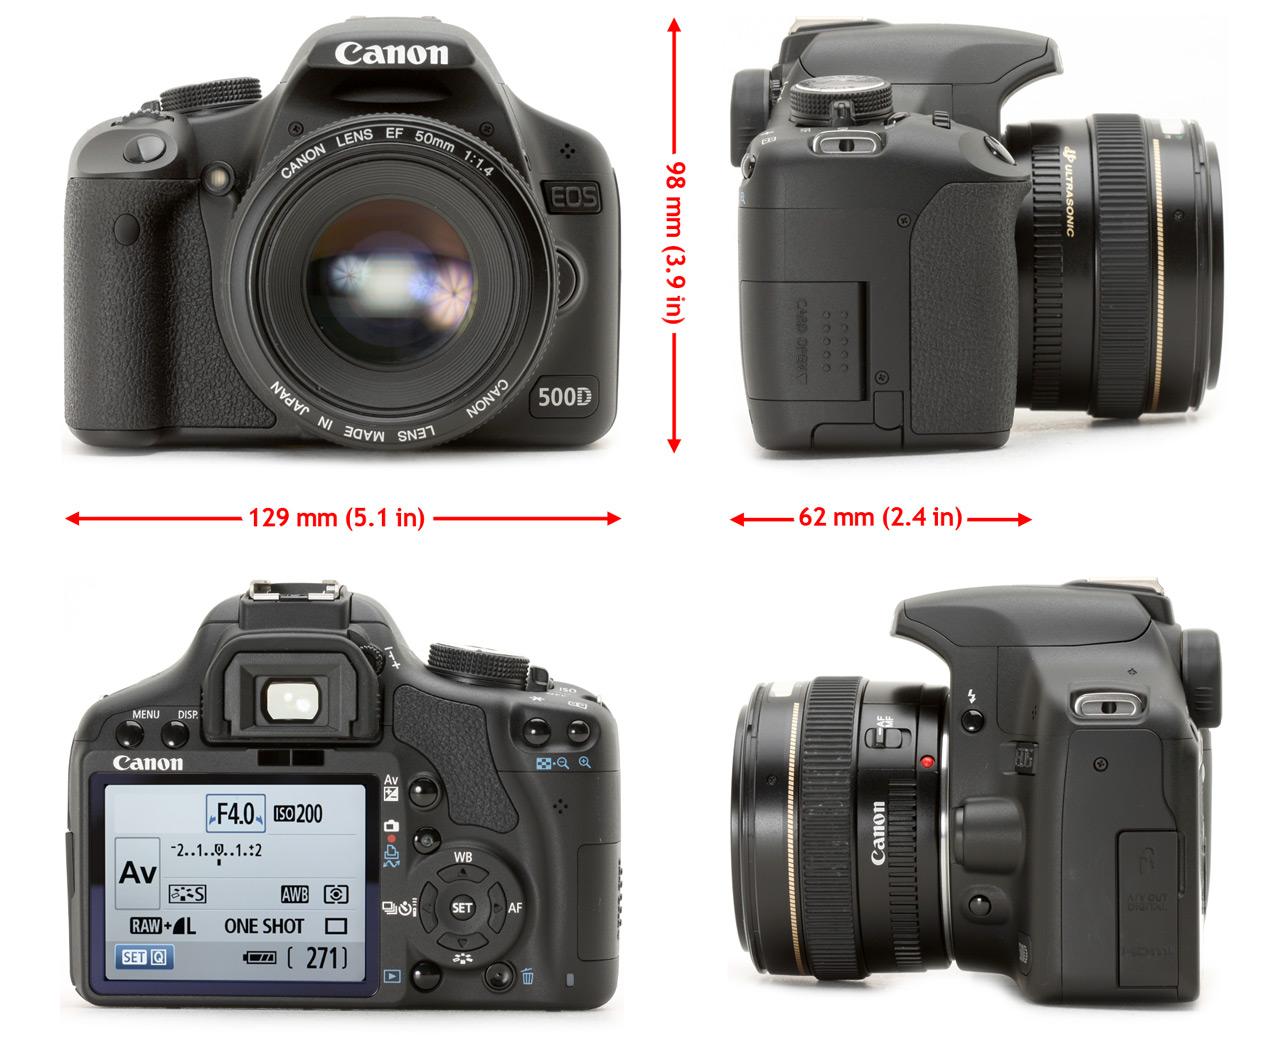 Canon EOS Kiss X3 / 500D len kit 18-55mm IS